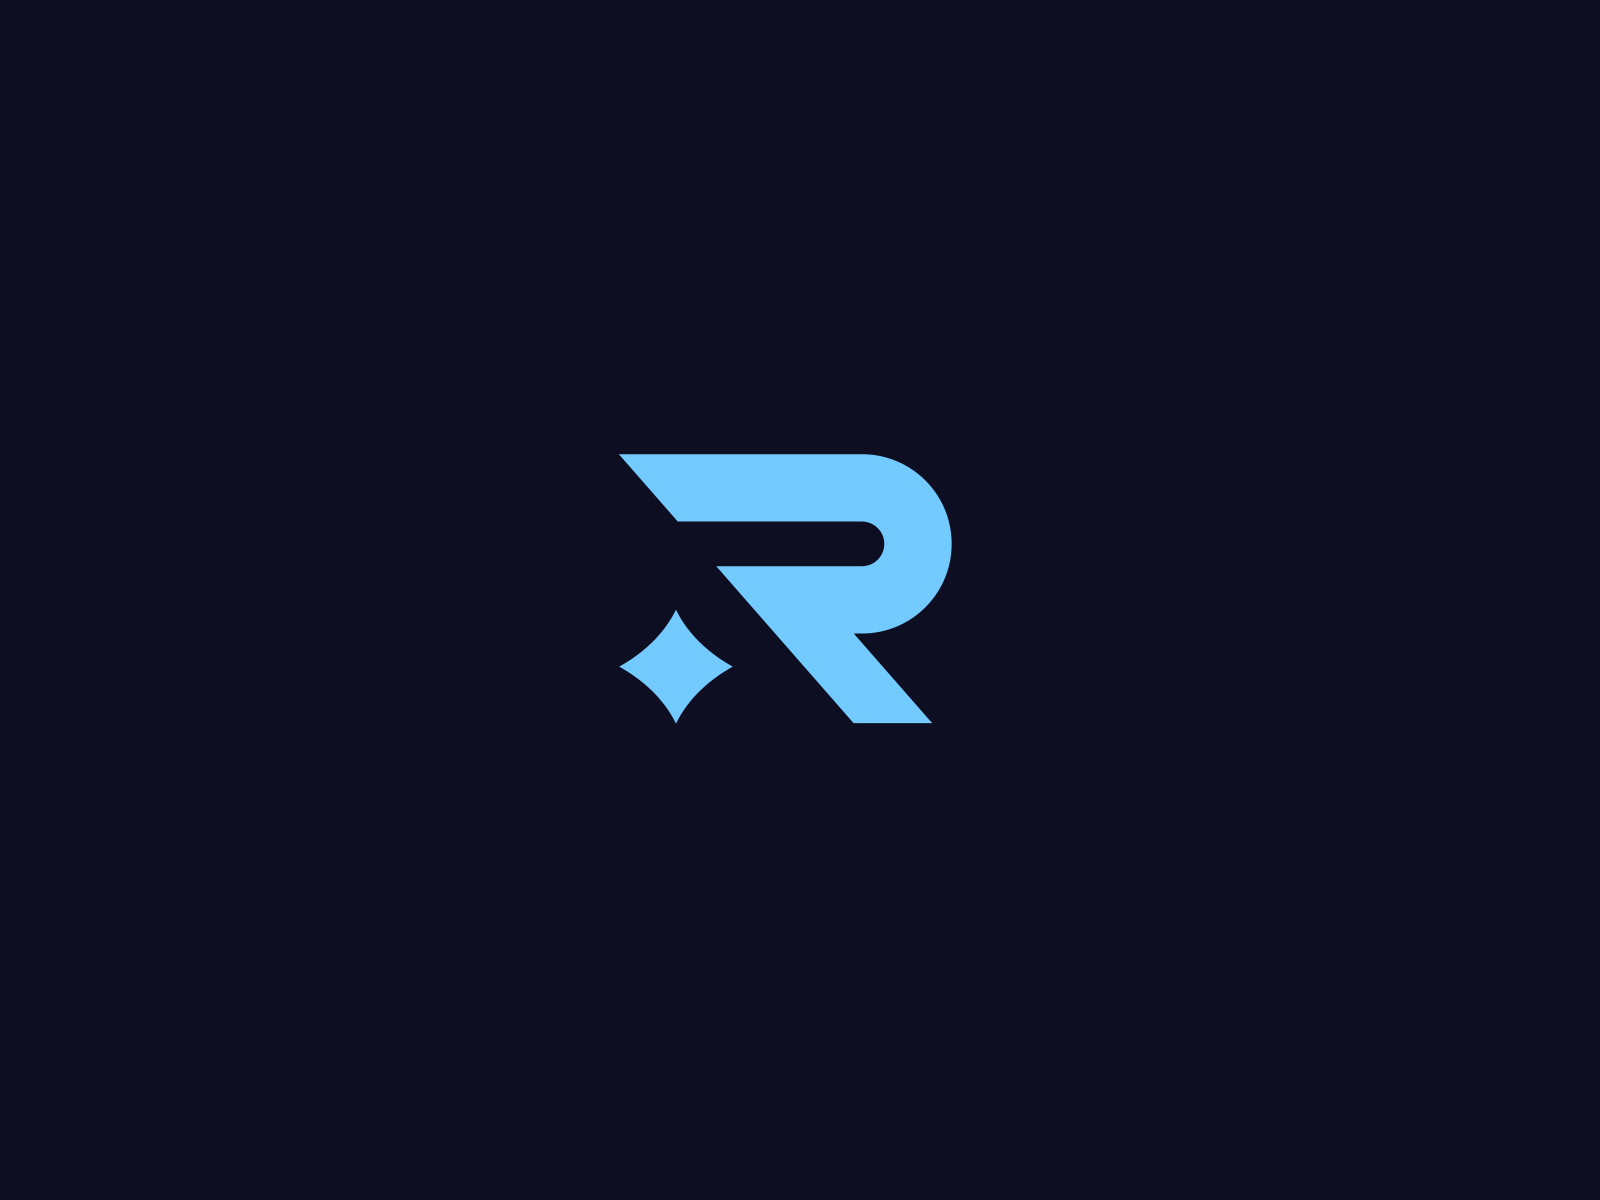 R + star logo by Asper on Dribbble